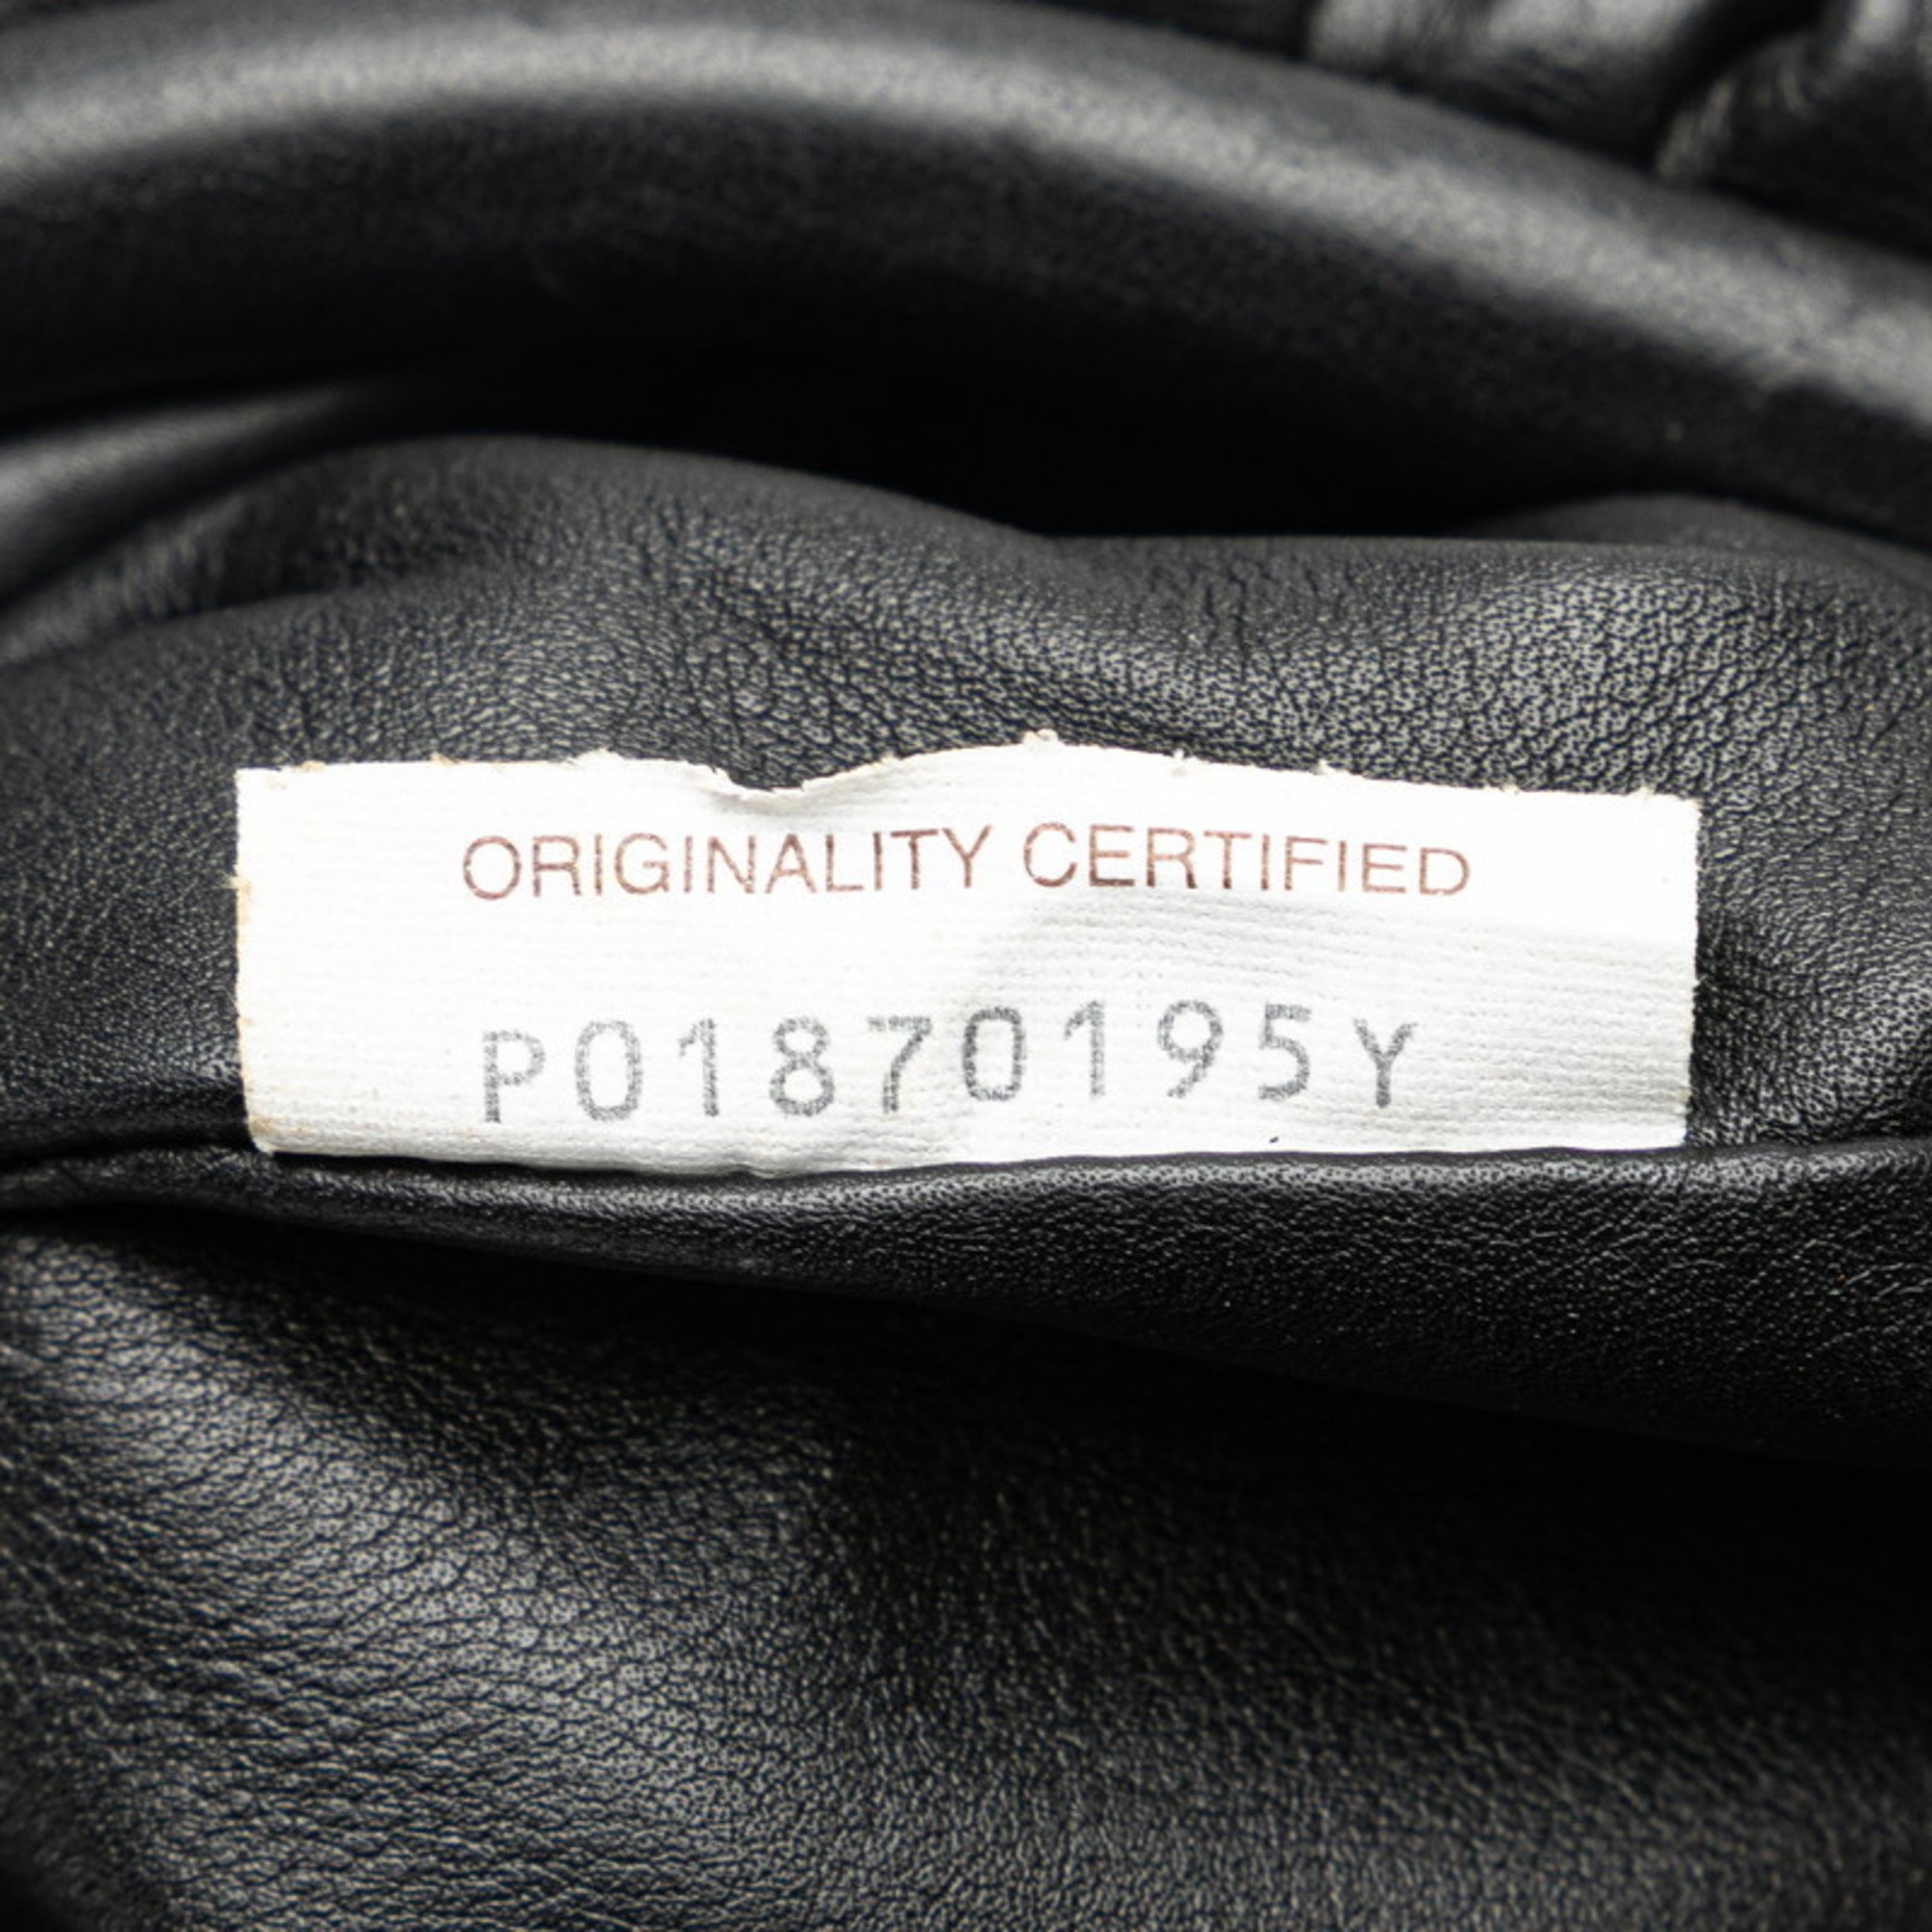 Bottega Veneta The Chain Pouch Handbag Shoulder Bag Black Leather Women's BOTTEGAVENETA